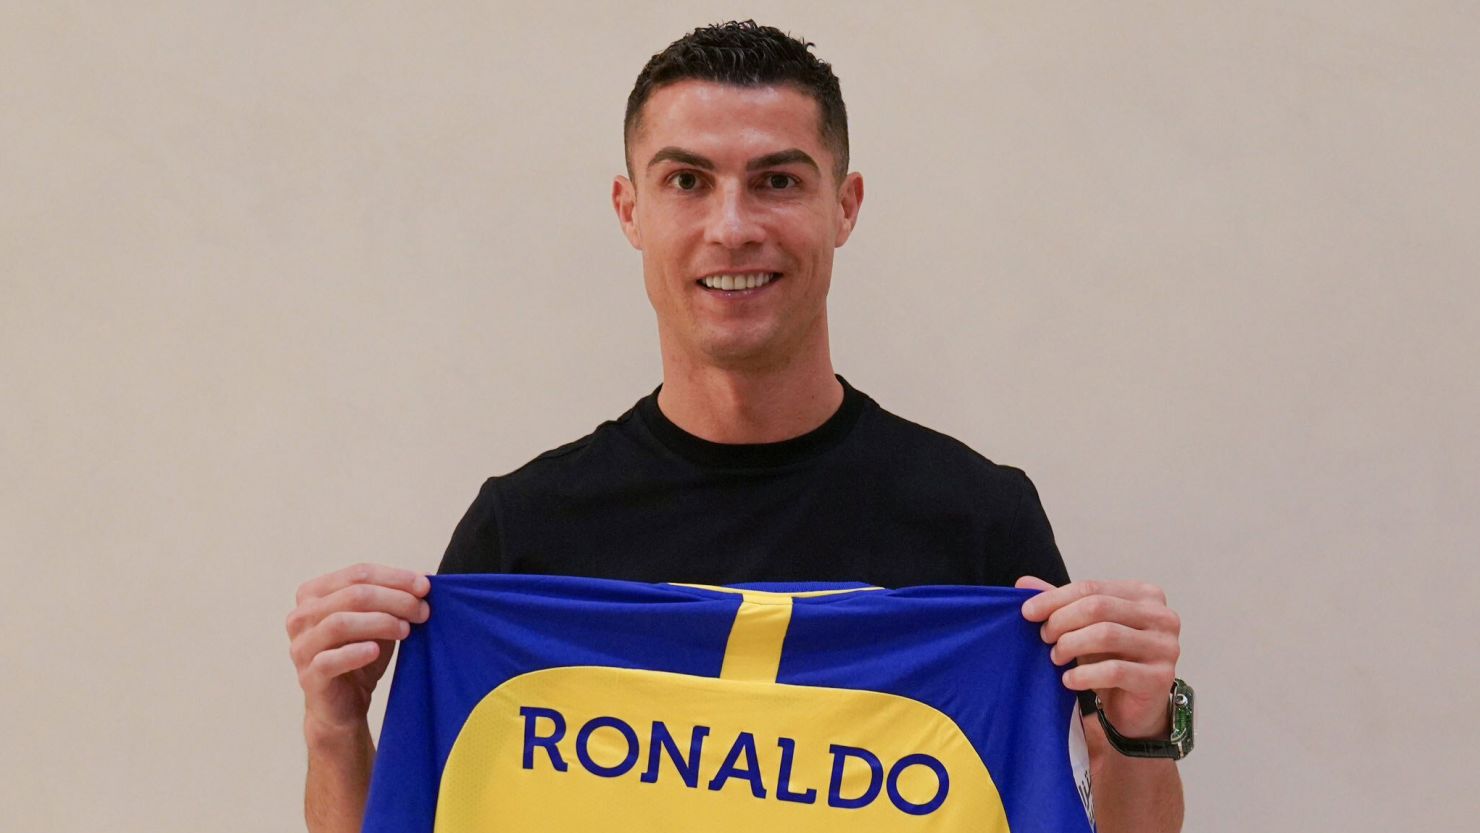 Cristiano Ronaldo signs for Saudi team Al Nassr | CNN